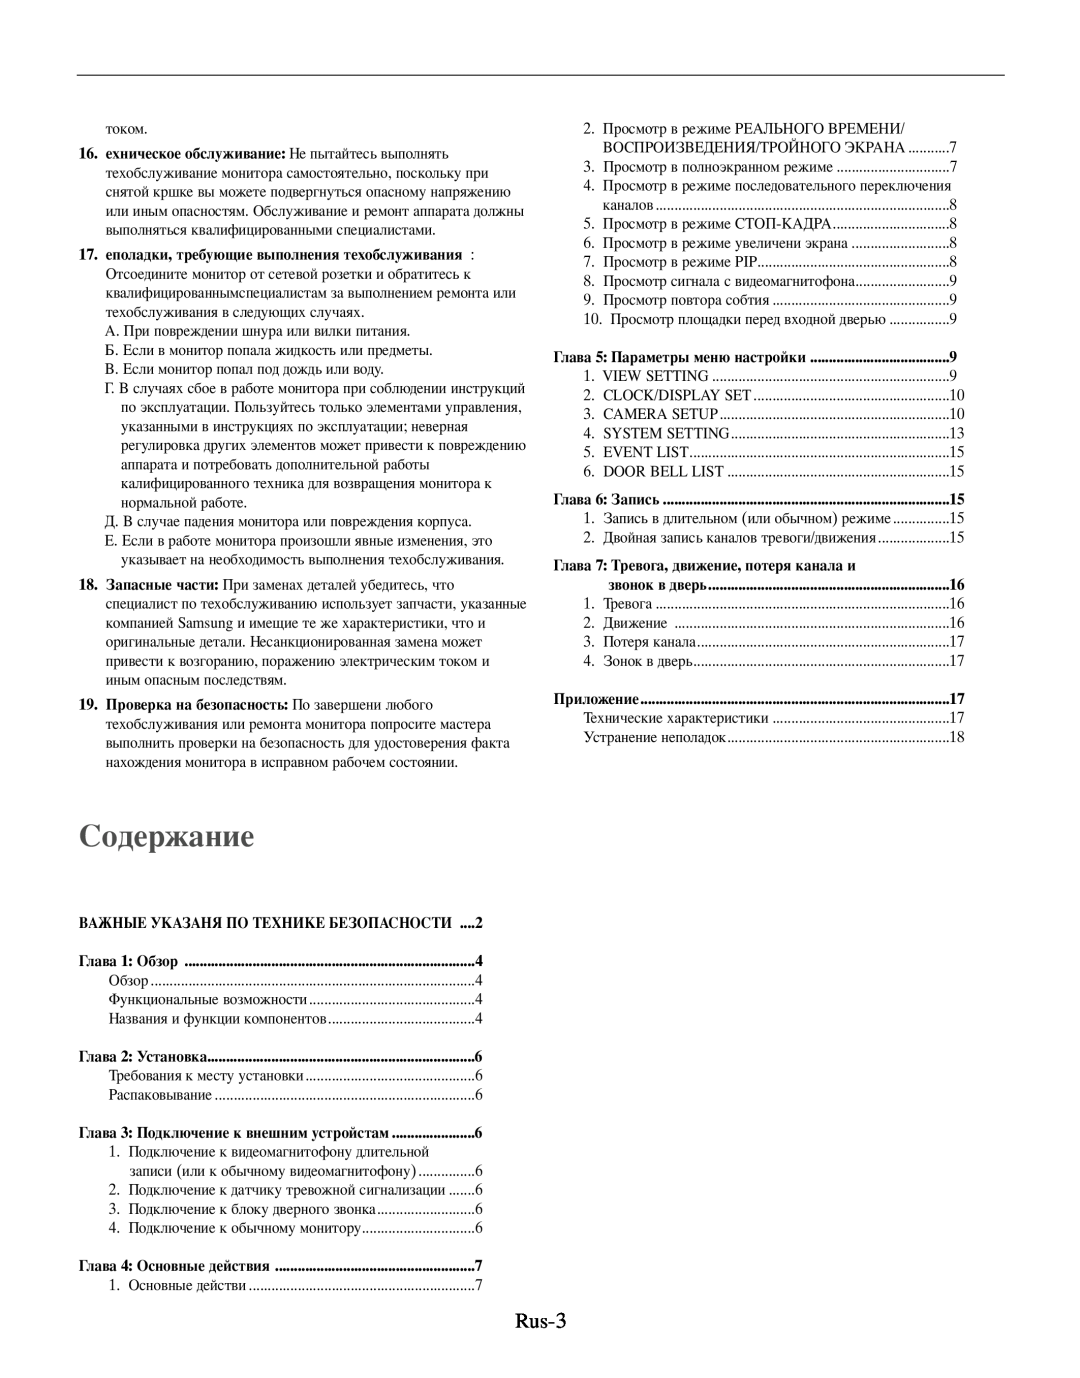 Samsung SMO-210MP/UMG, SMO-210TRP manual жание, Rus-3, 18. части, жение 